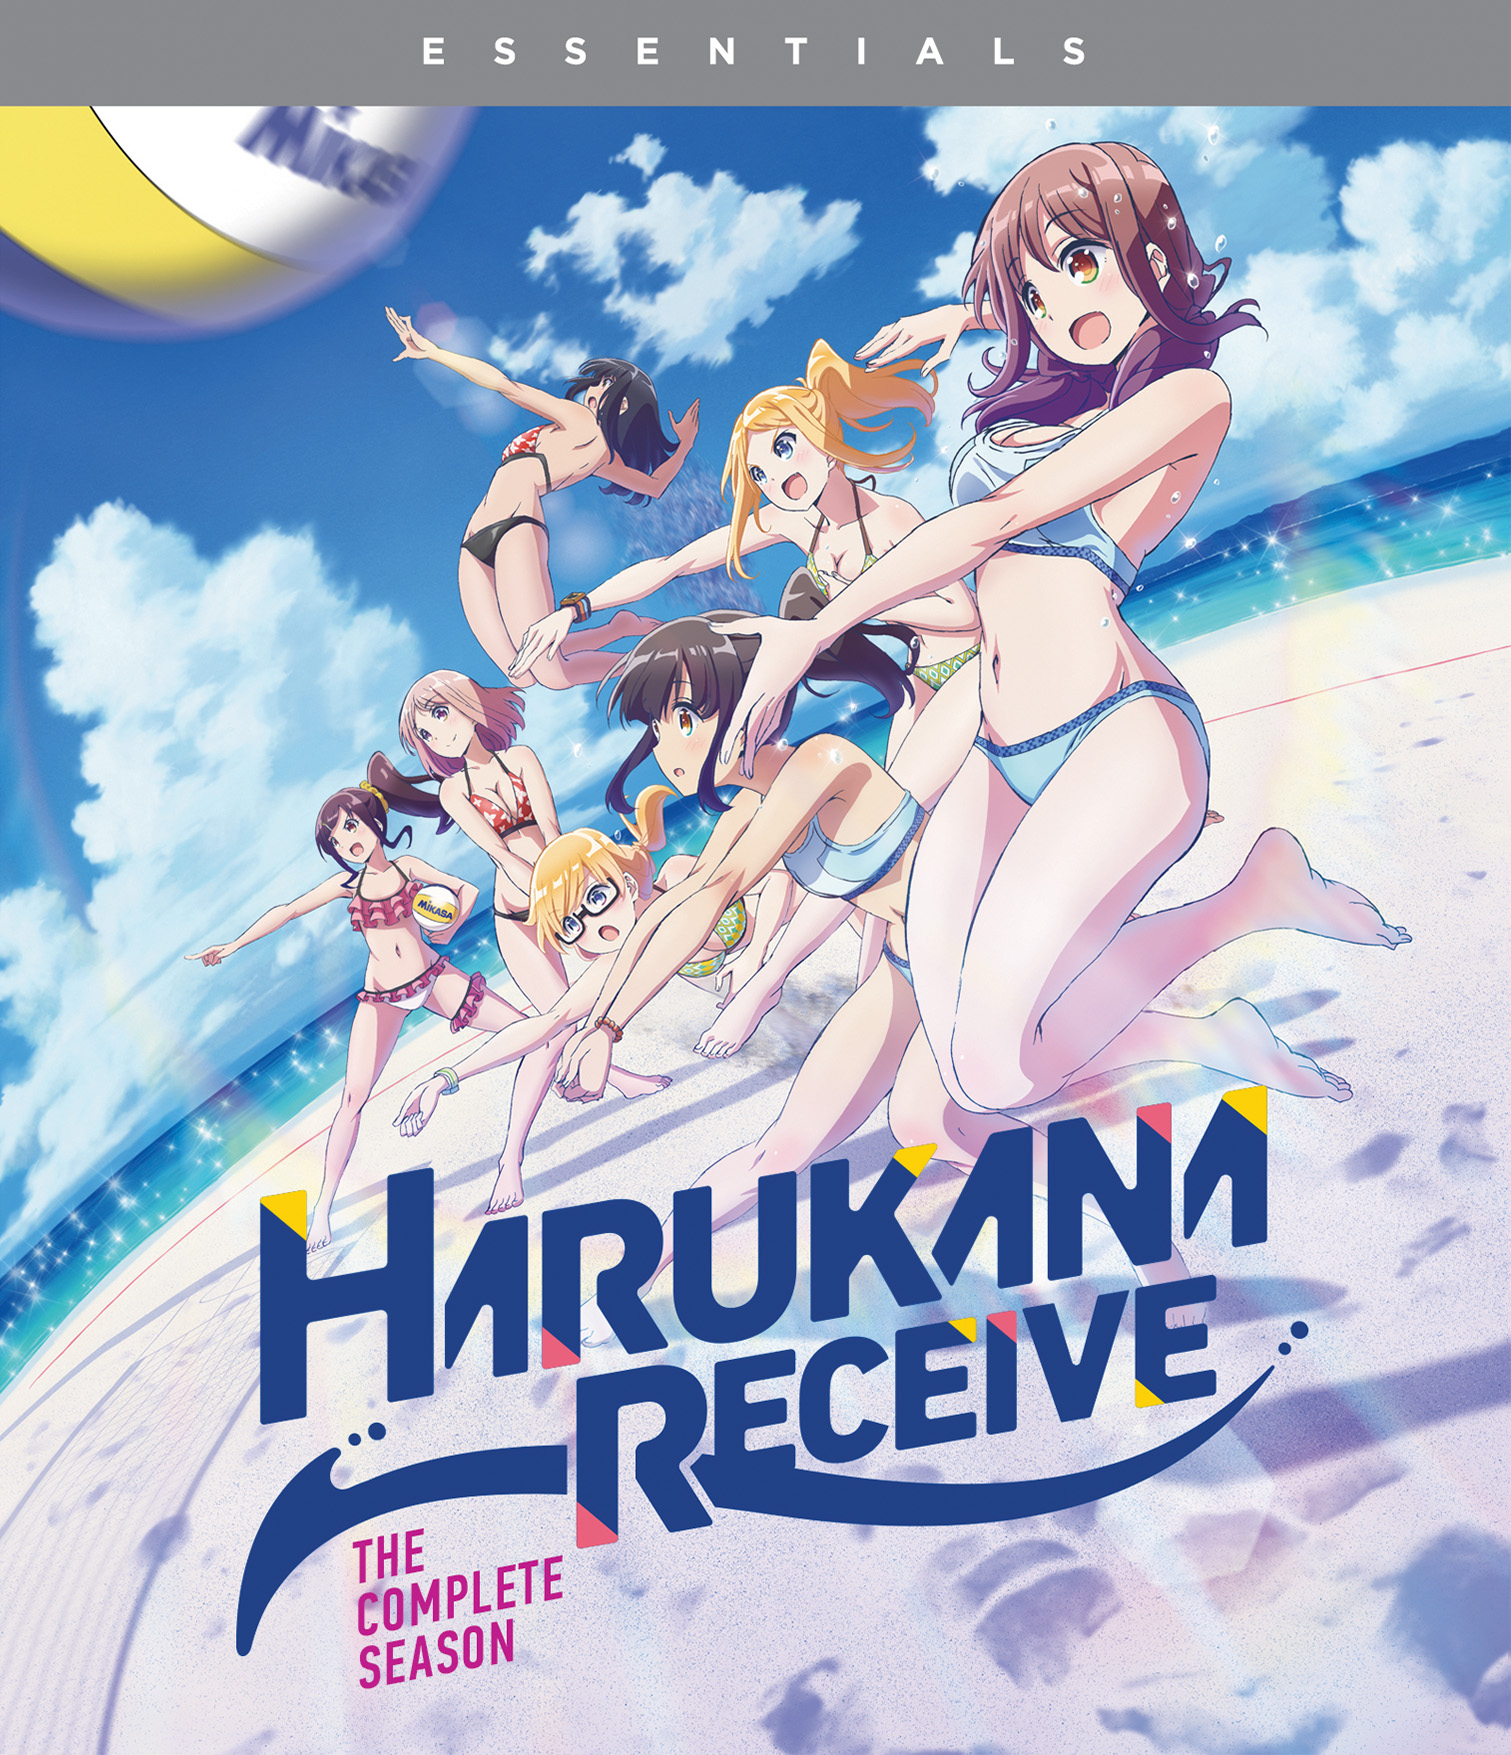 Harukana Receive Manga Volume 4